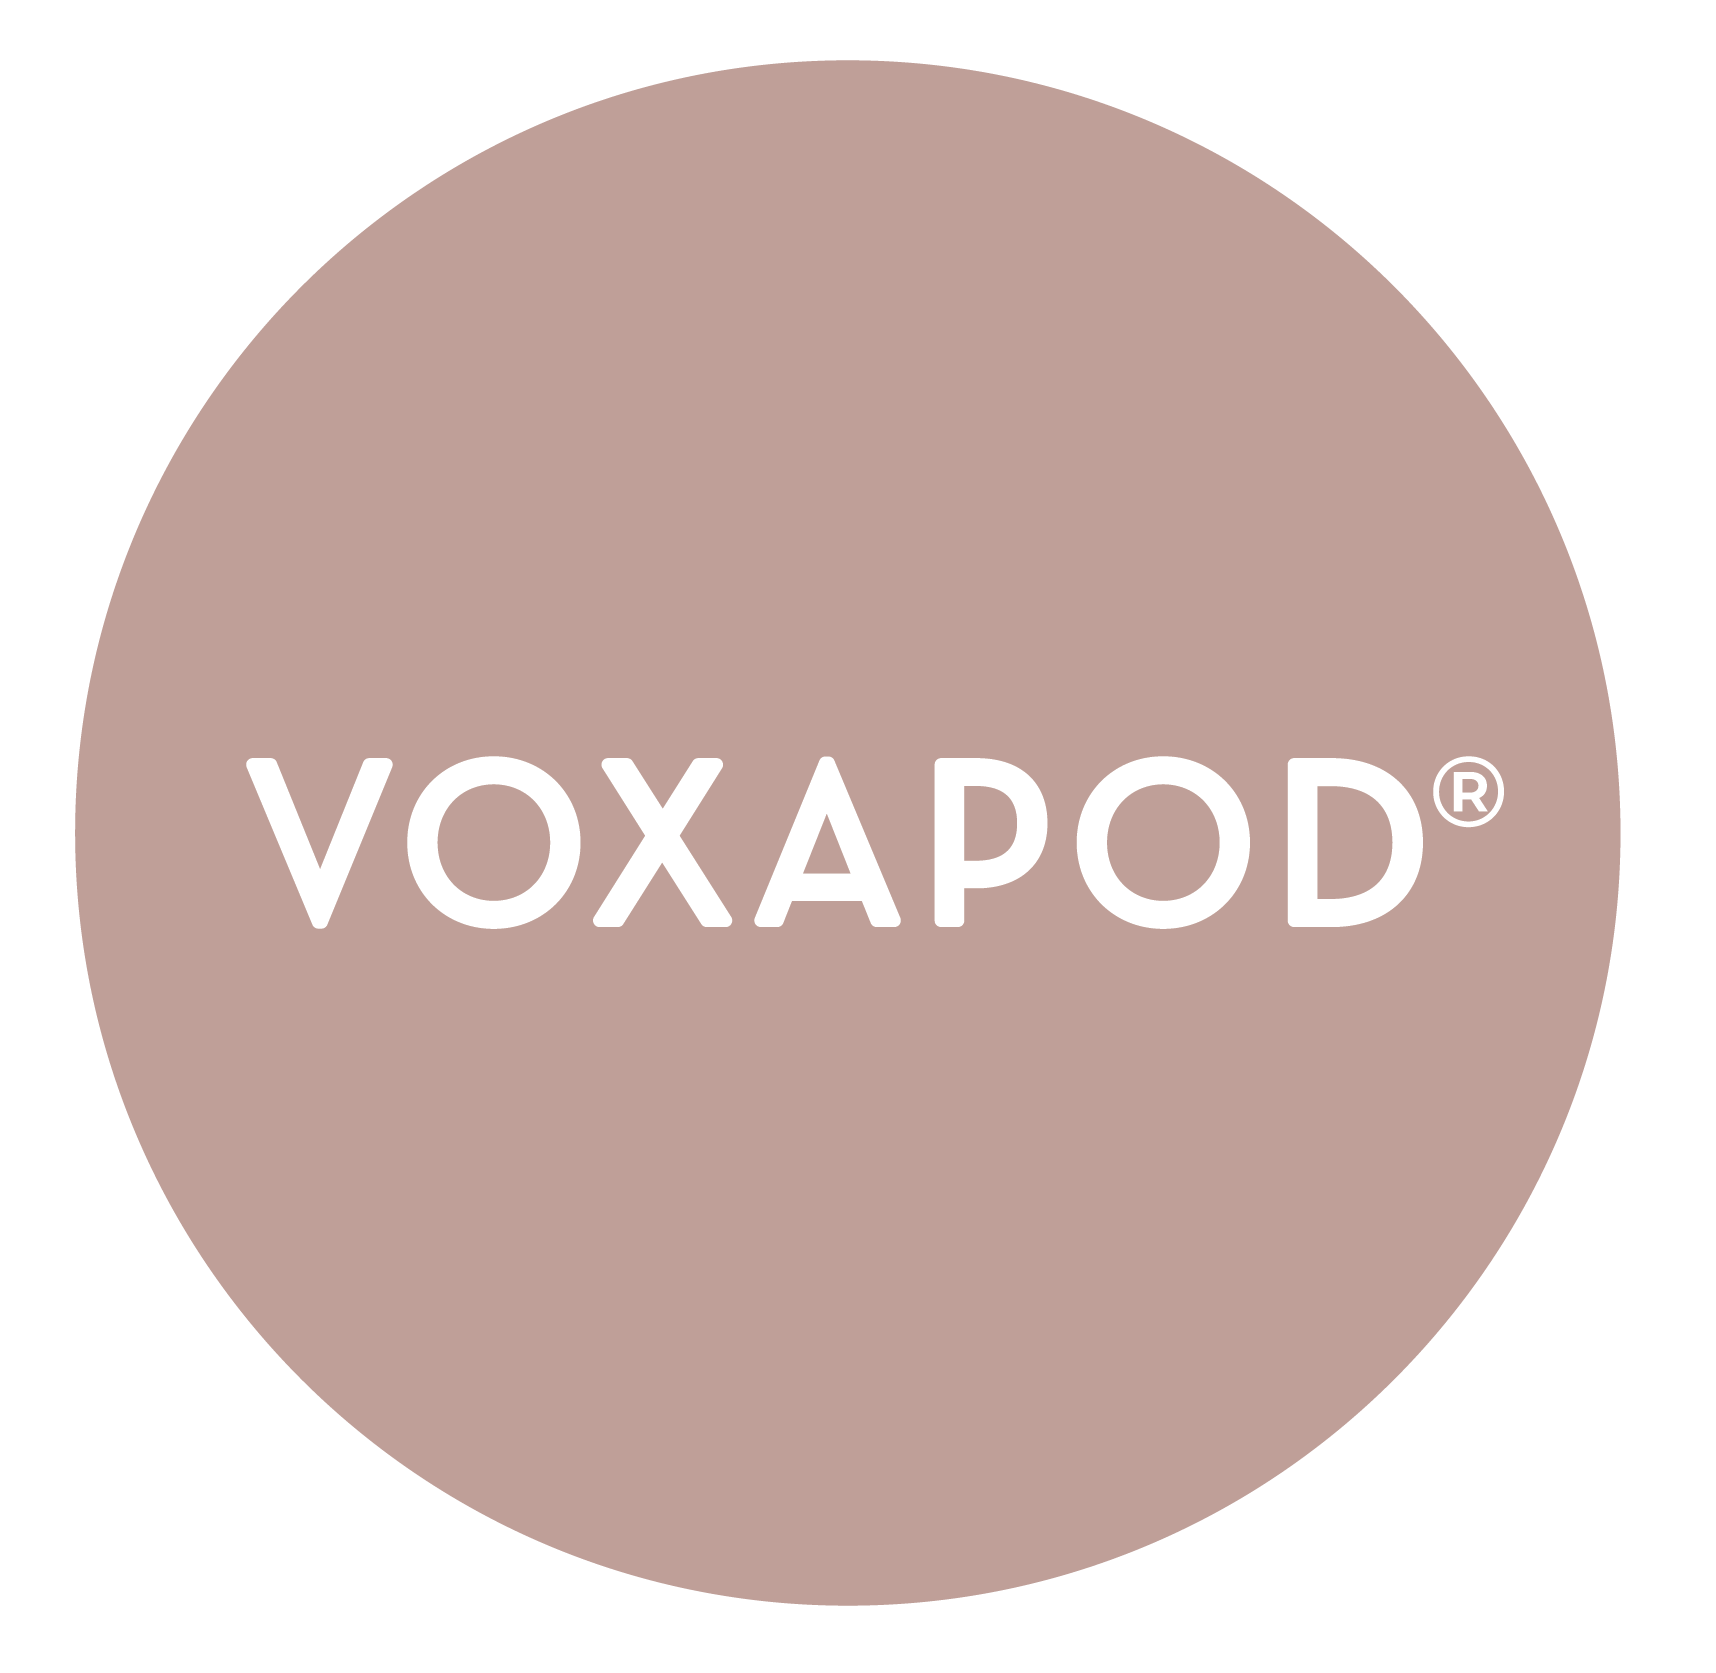 VOXAPOD Menstrual Cup